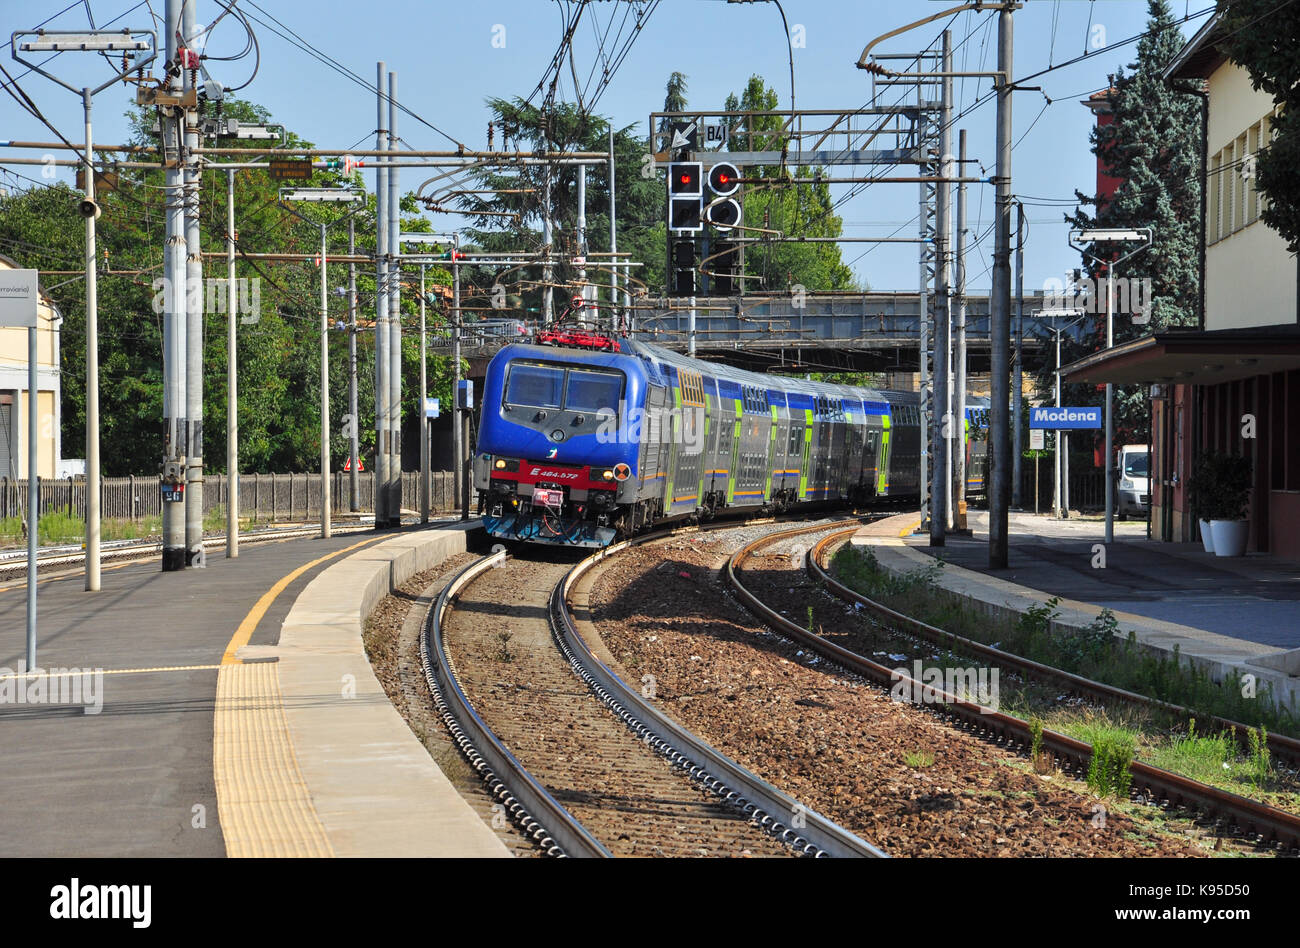 Class E464 electric locomotive heads a passenger train into the railway station, Modena, Italy Stock Photo